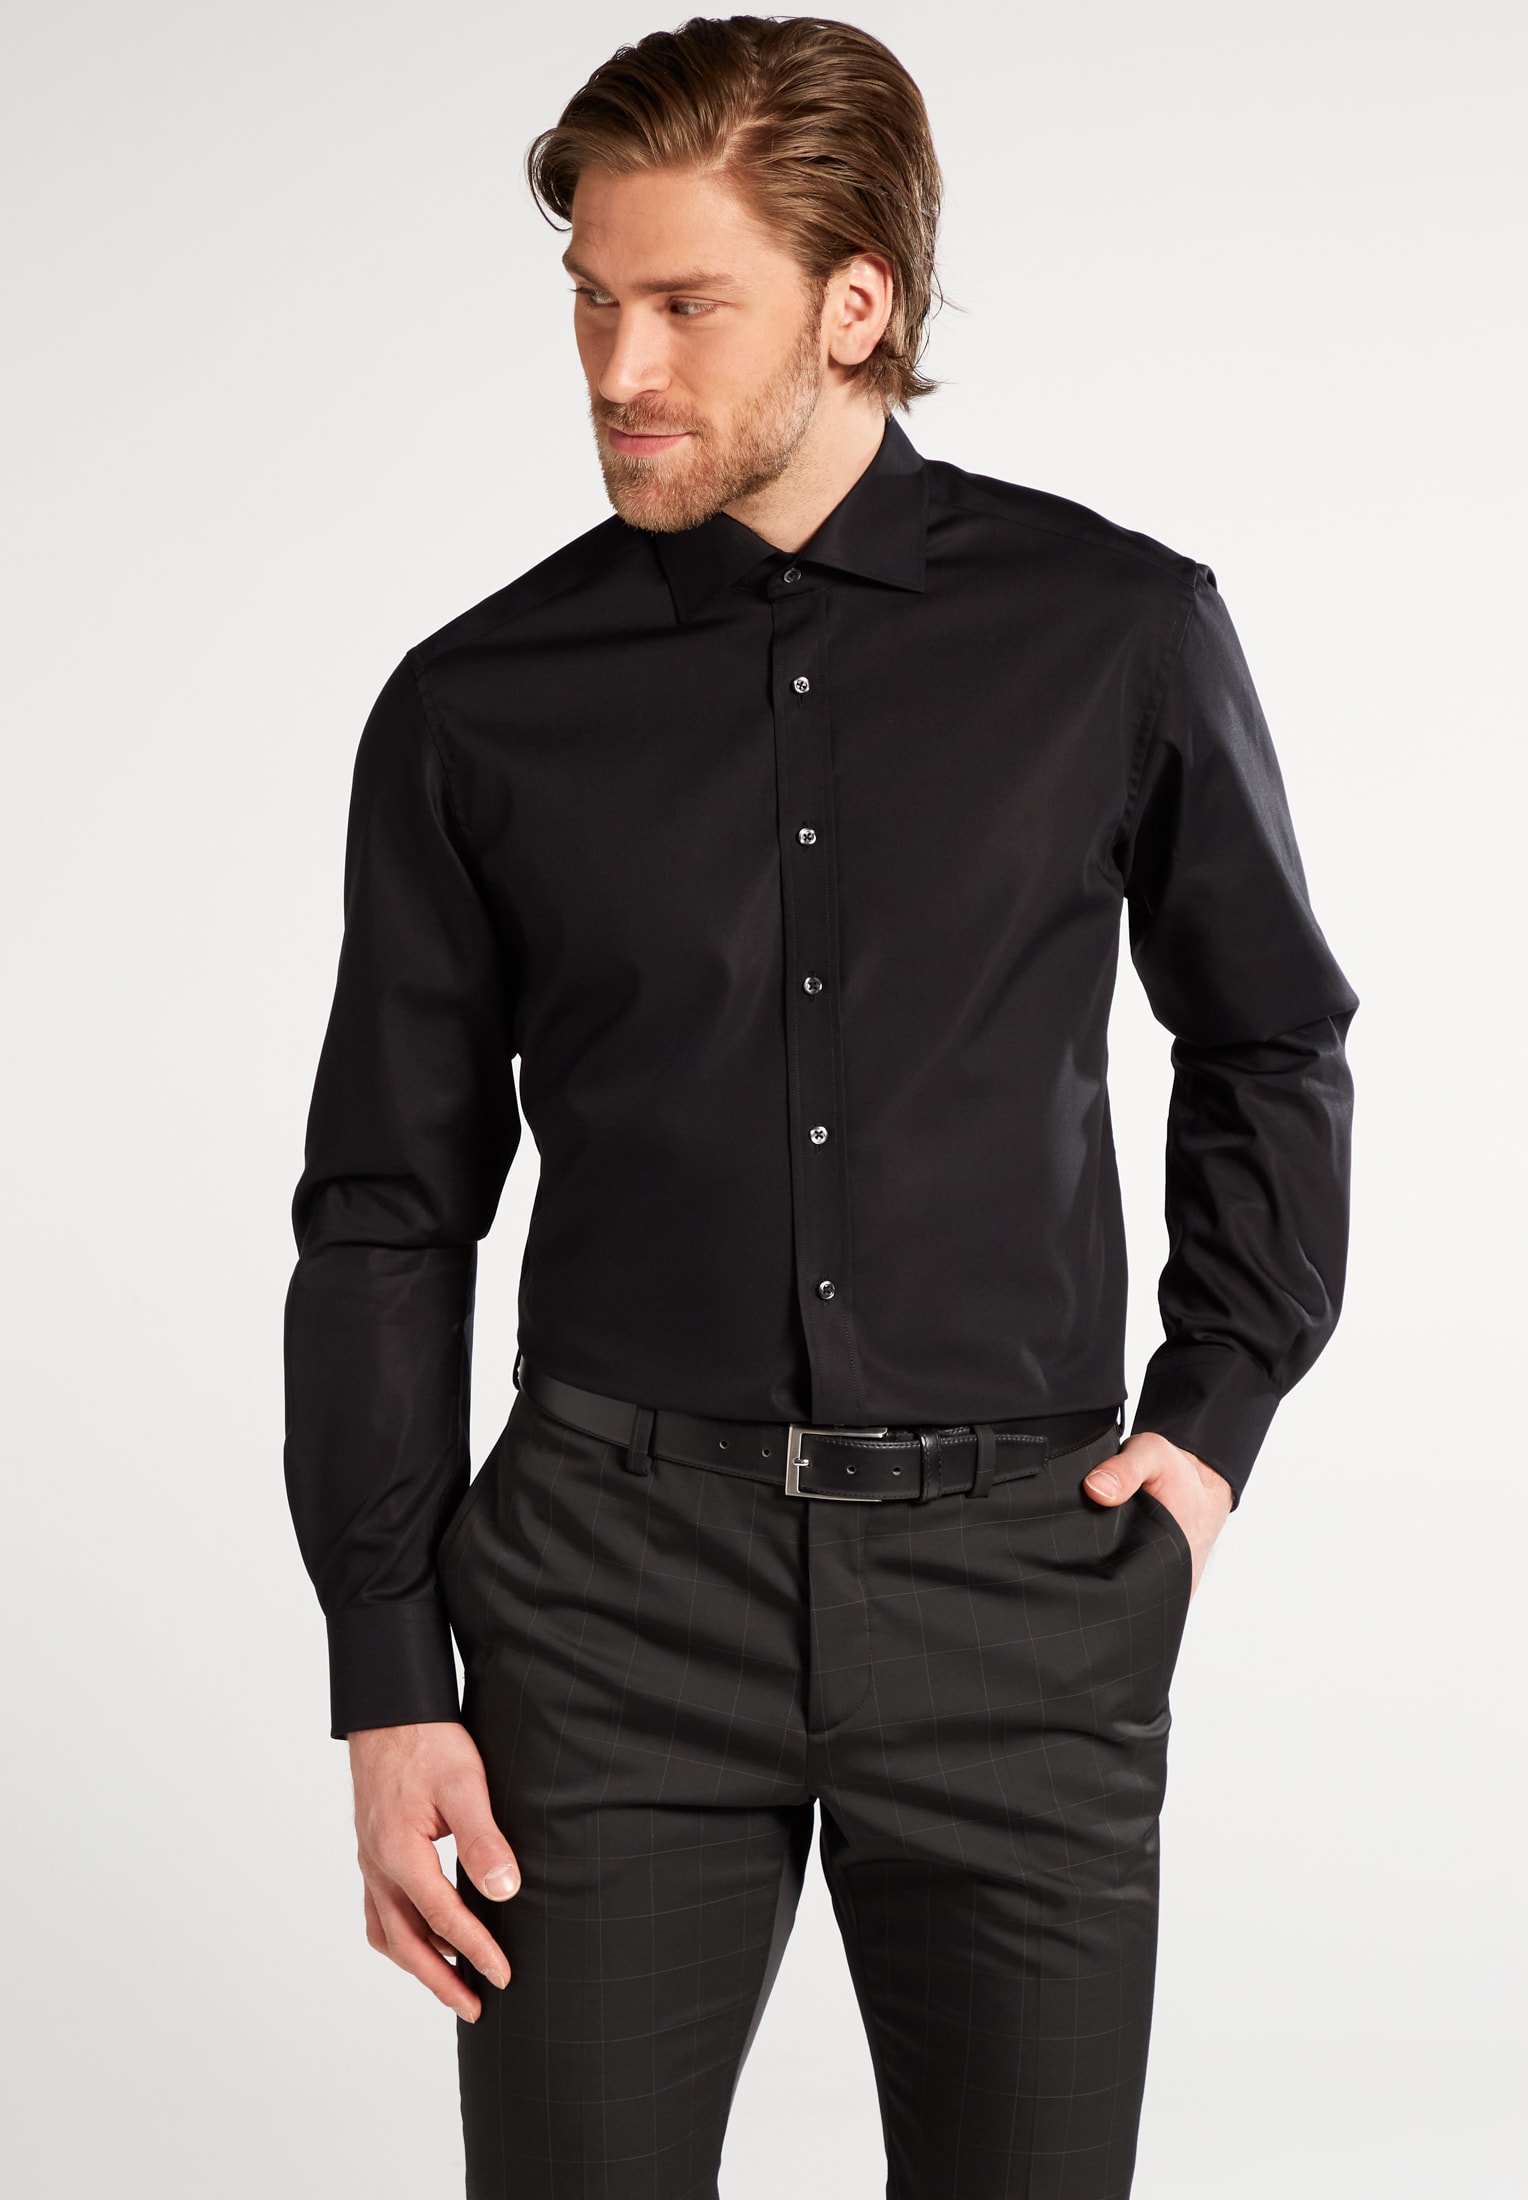 | schwarz 41 MODERN FIT in Original unifarben Shirt schwarz 1SH00113-03-91-41-1/1 | Langarm | |